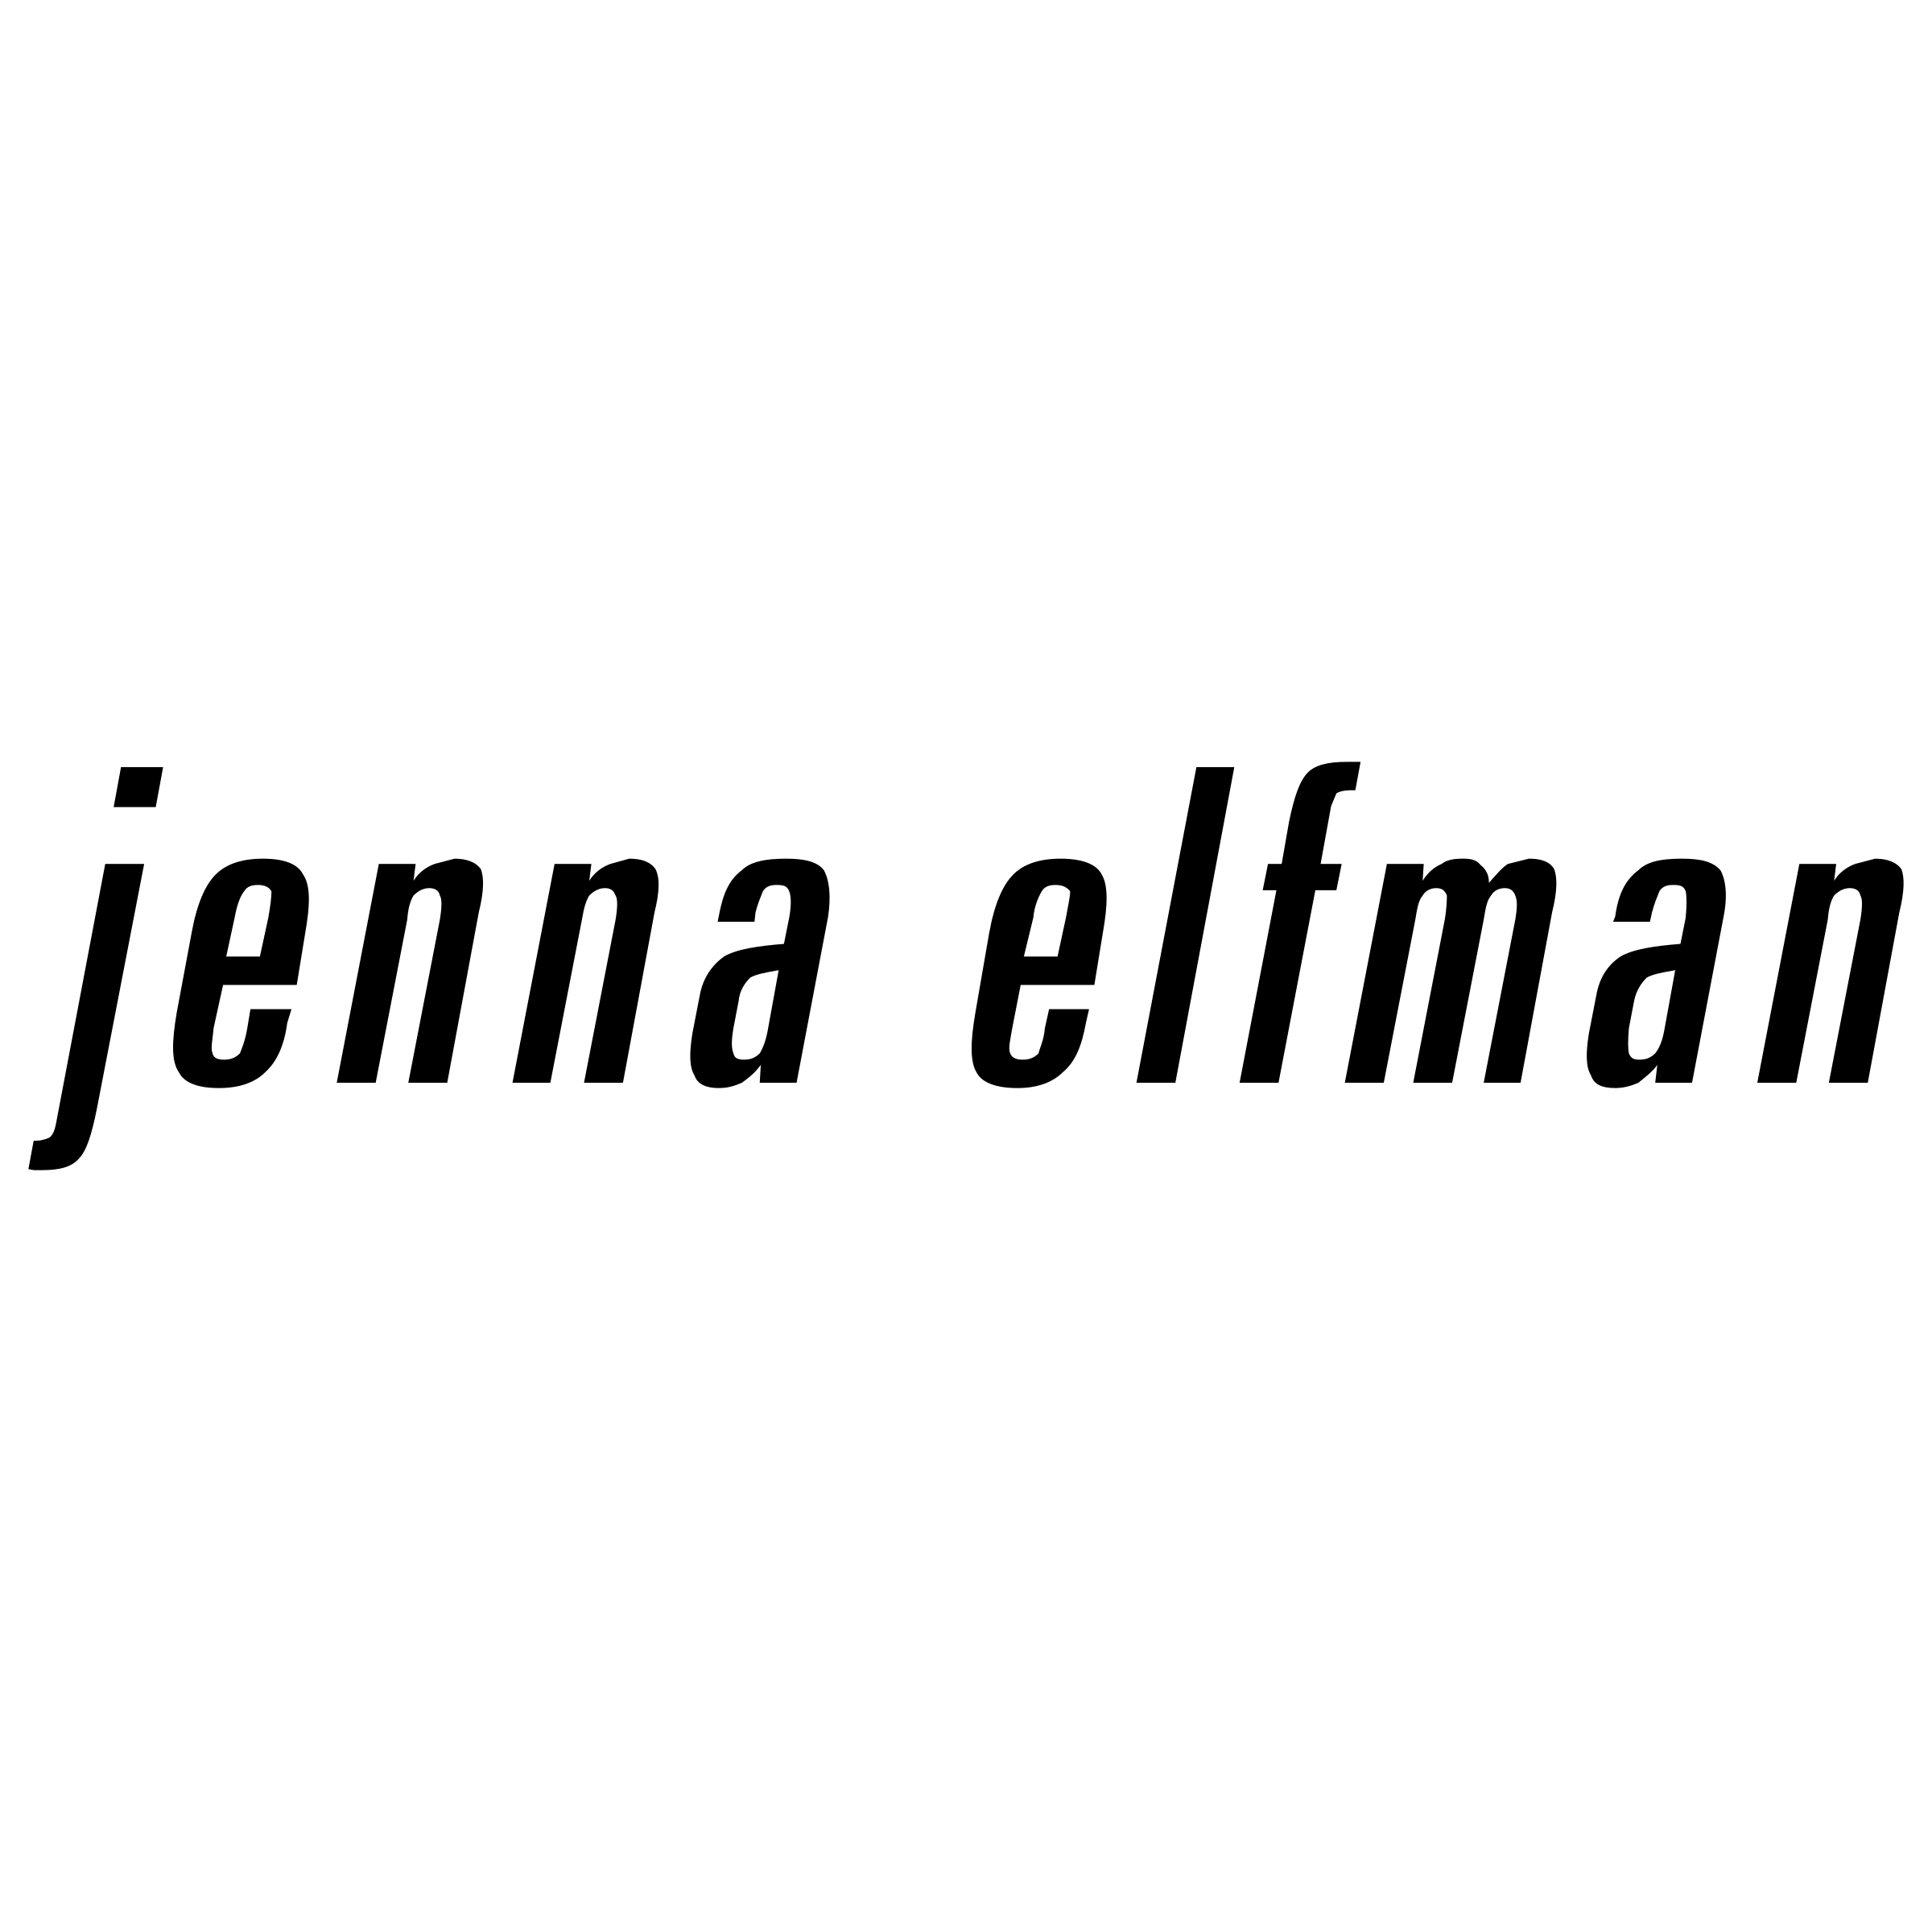 Jenna Logo - Jenna Elfman Logo PNG Transparent & SVG Vector - Freebie Supply